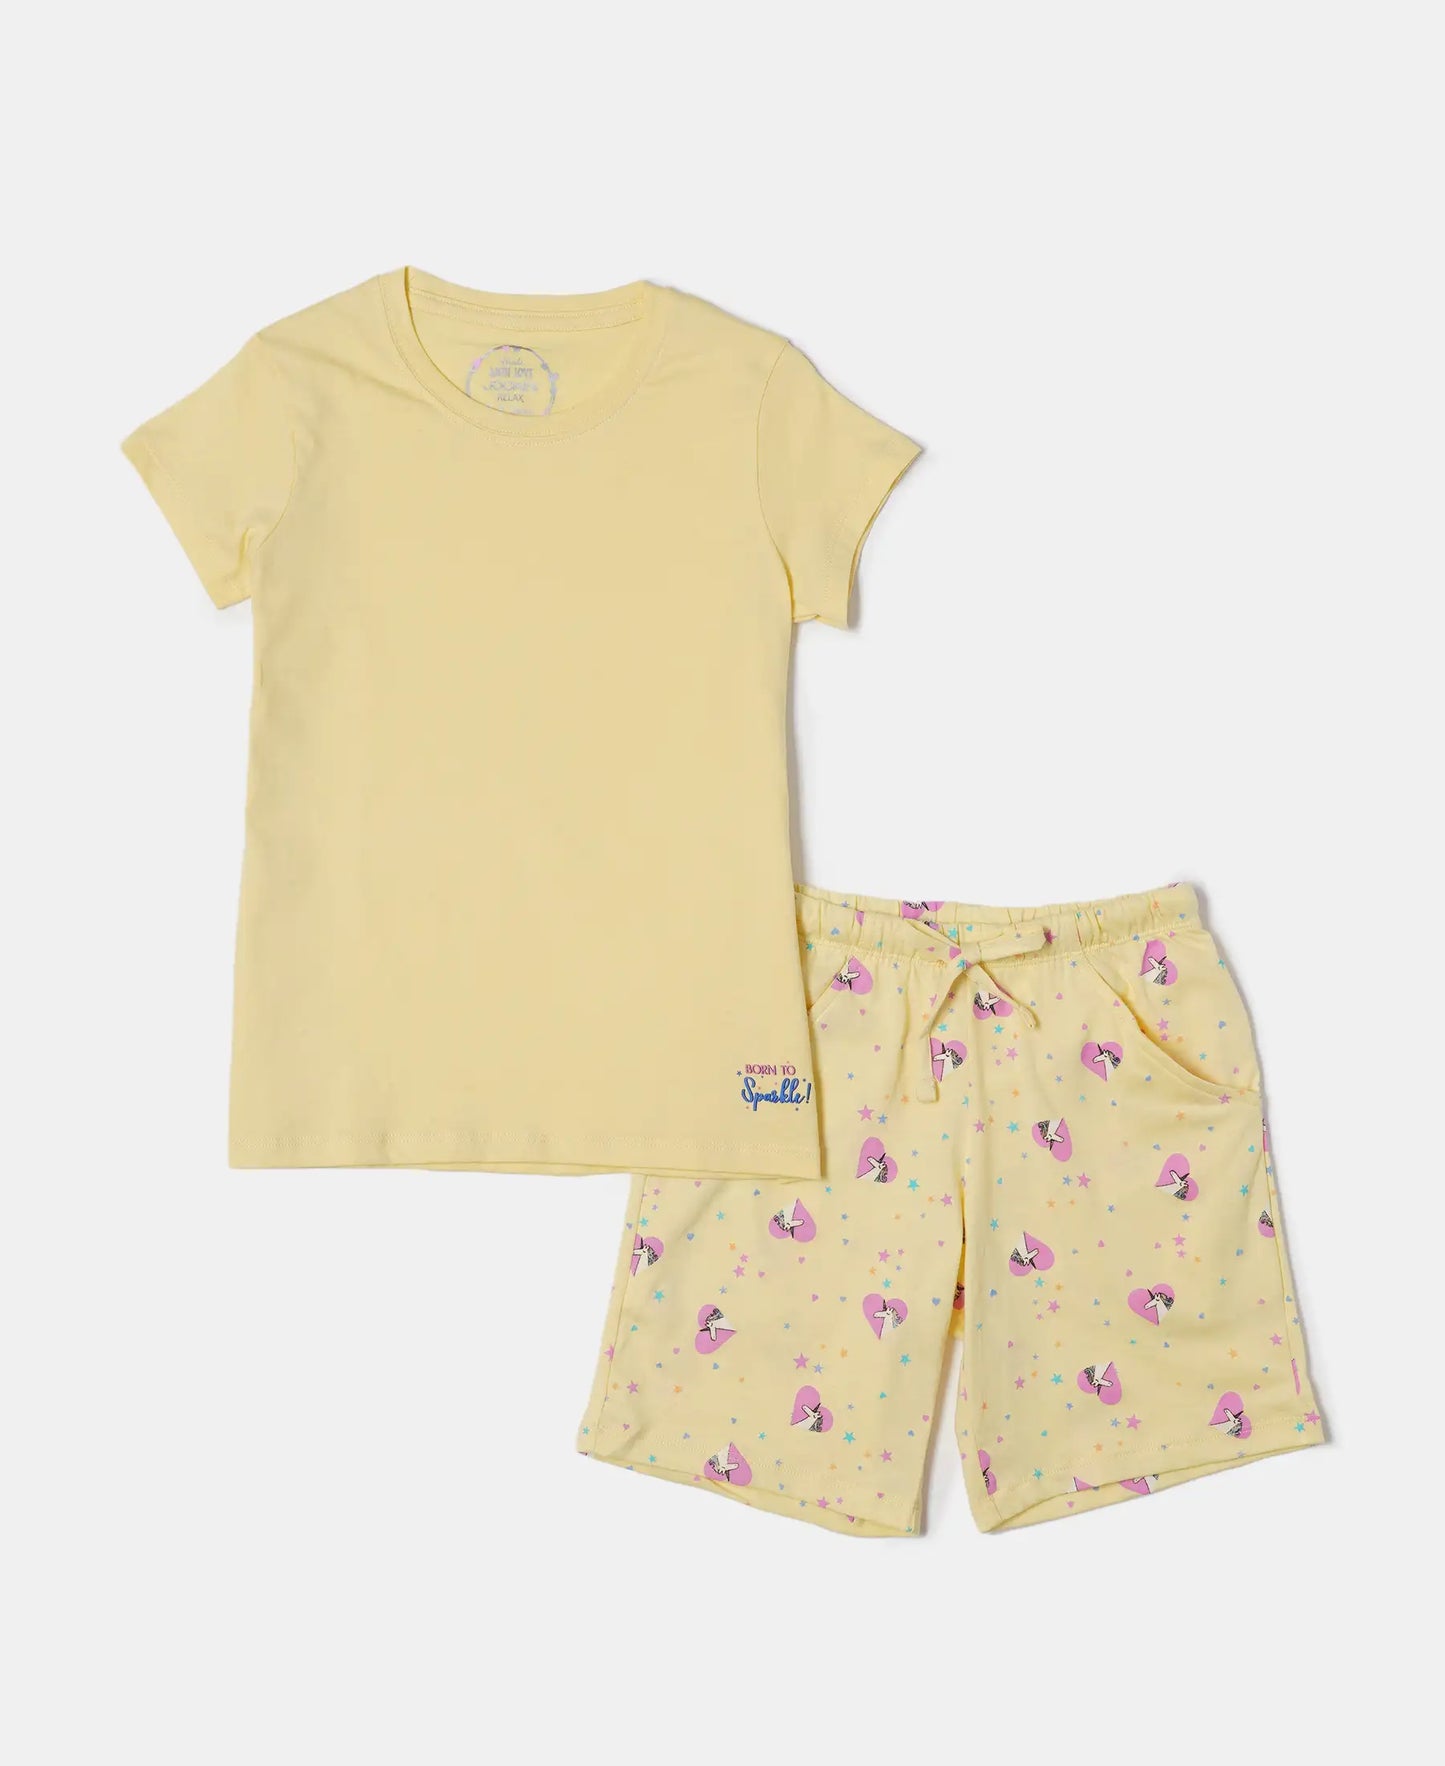 Super Combed Cotton Short Sleeve T-Shirt and Printed Shorts Set - Pale Banana